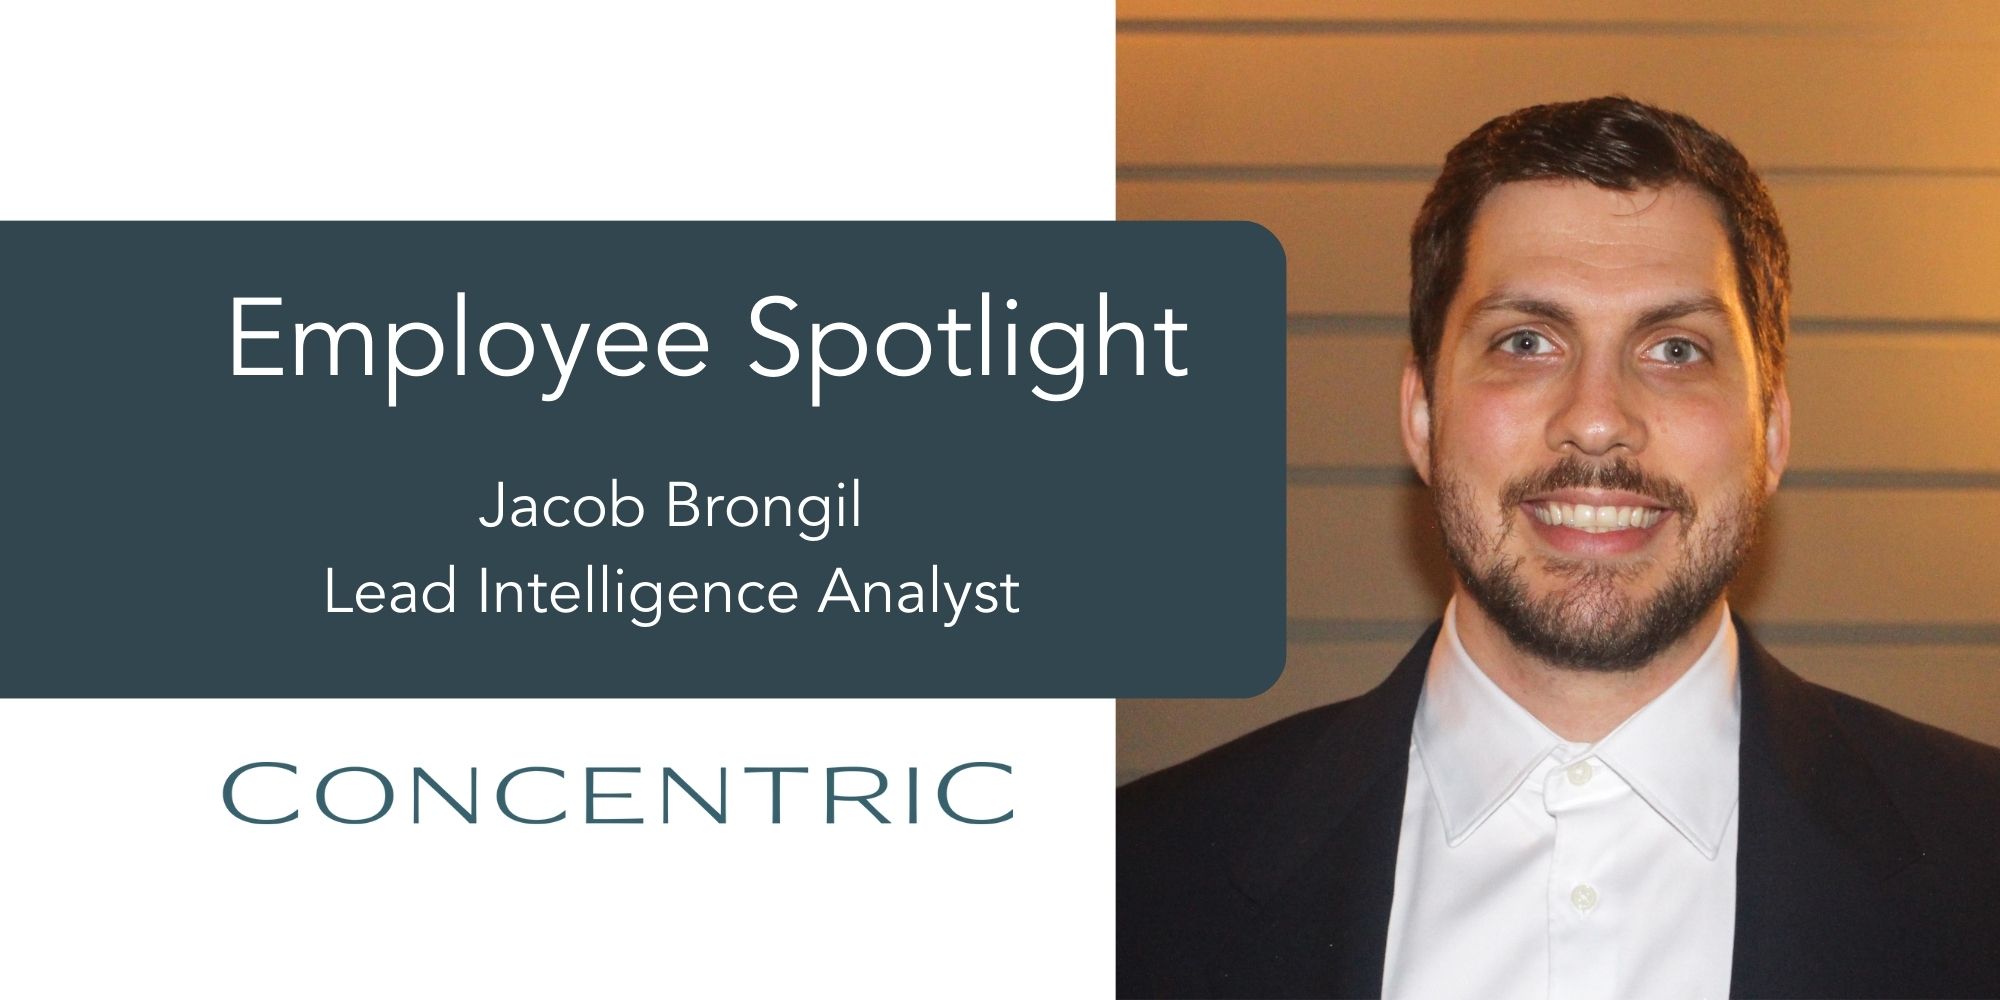 Employee Spotlight Jacob Brongil